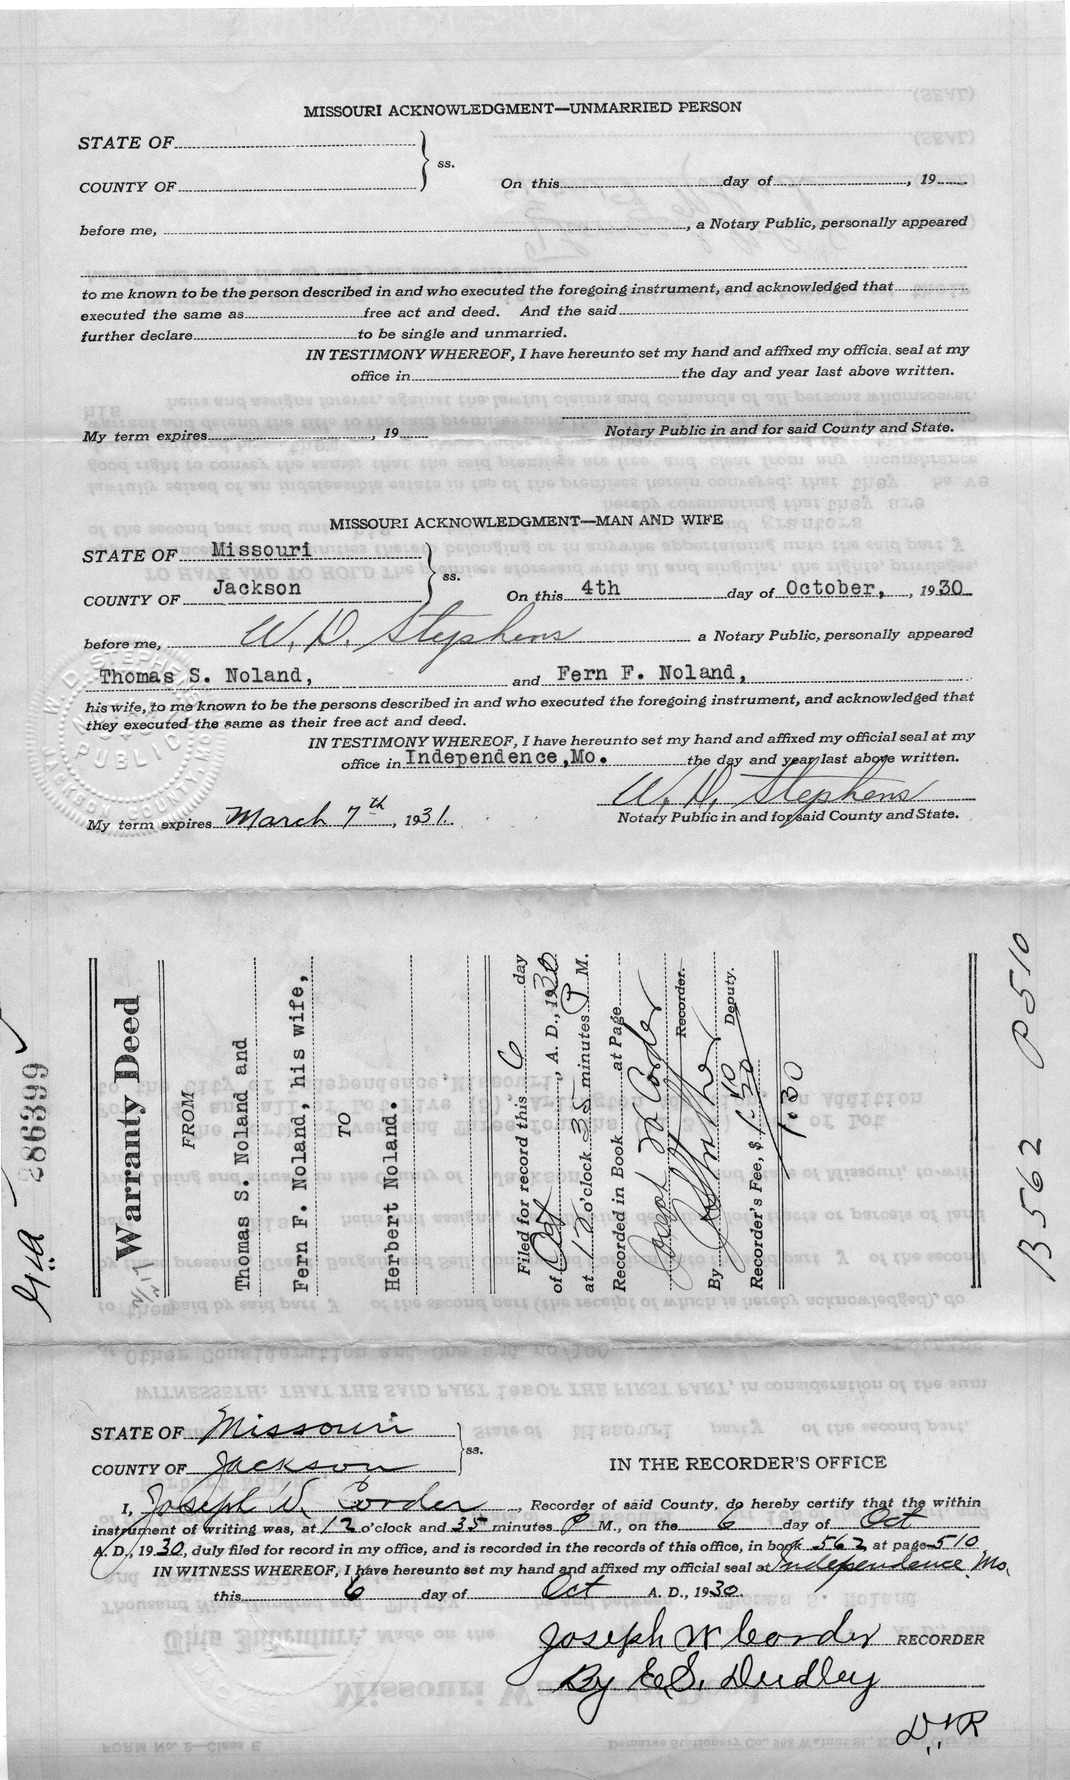 Warranty Deed from Thomas S. Noland and Fern F. Noland to Herbert Noland